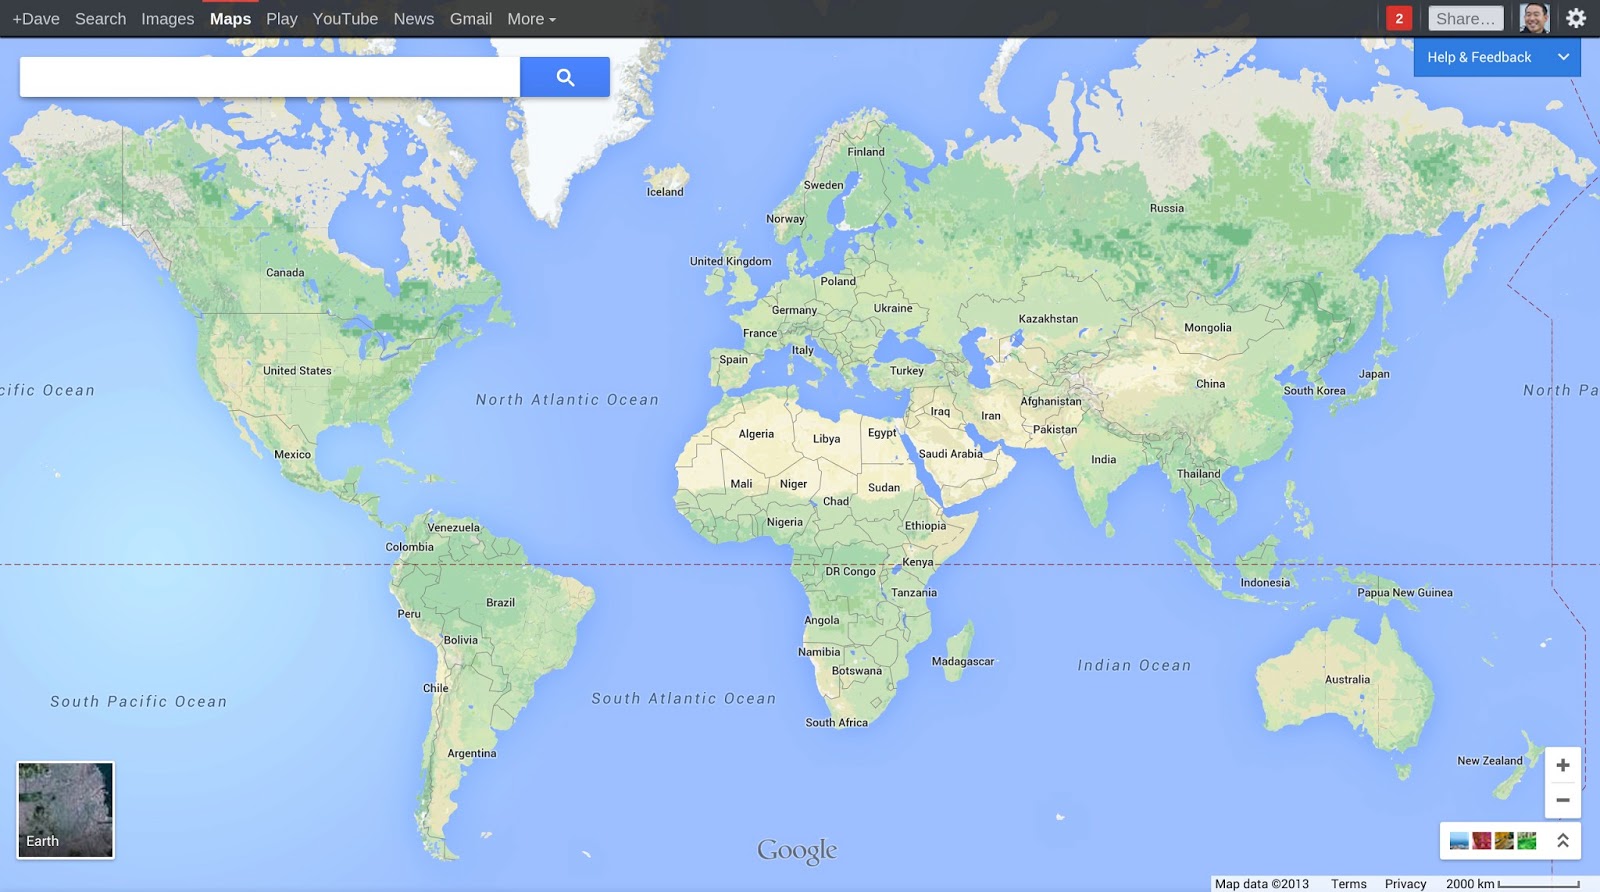 Google Maps overhaul showing entire world (2013)